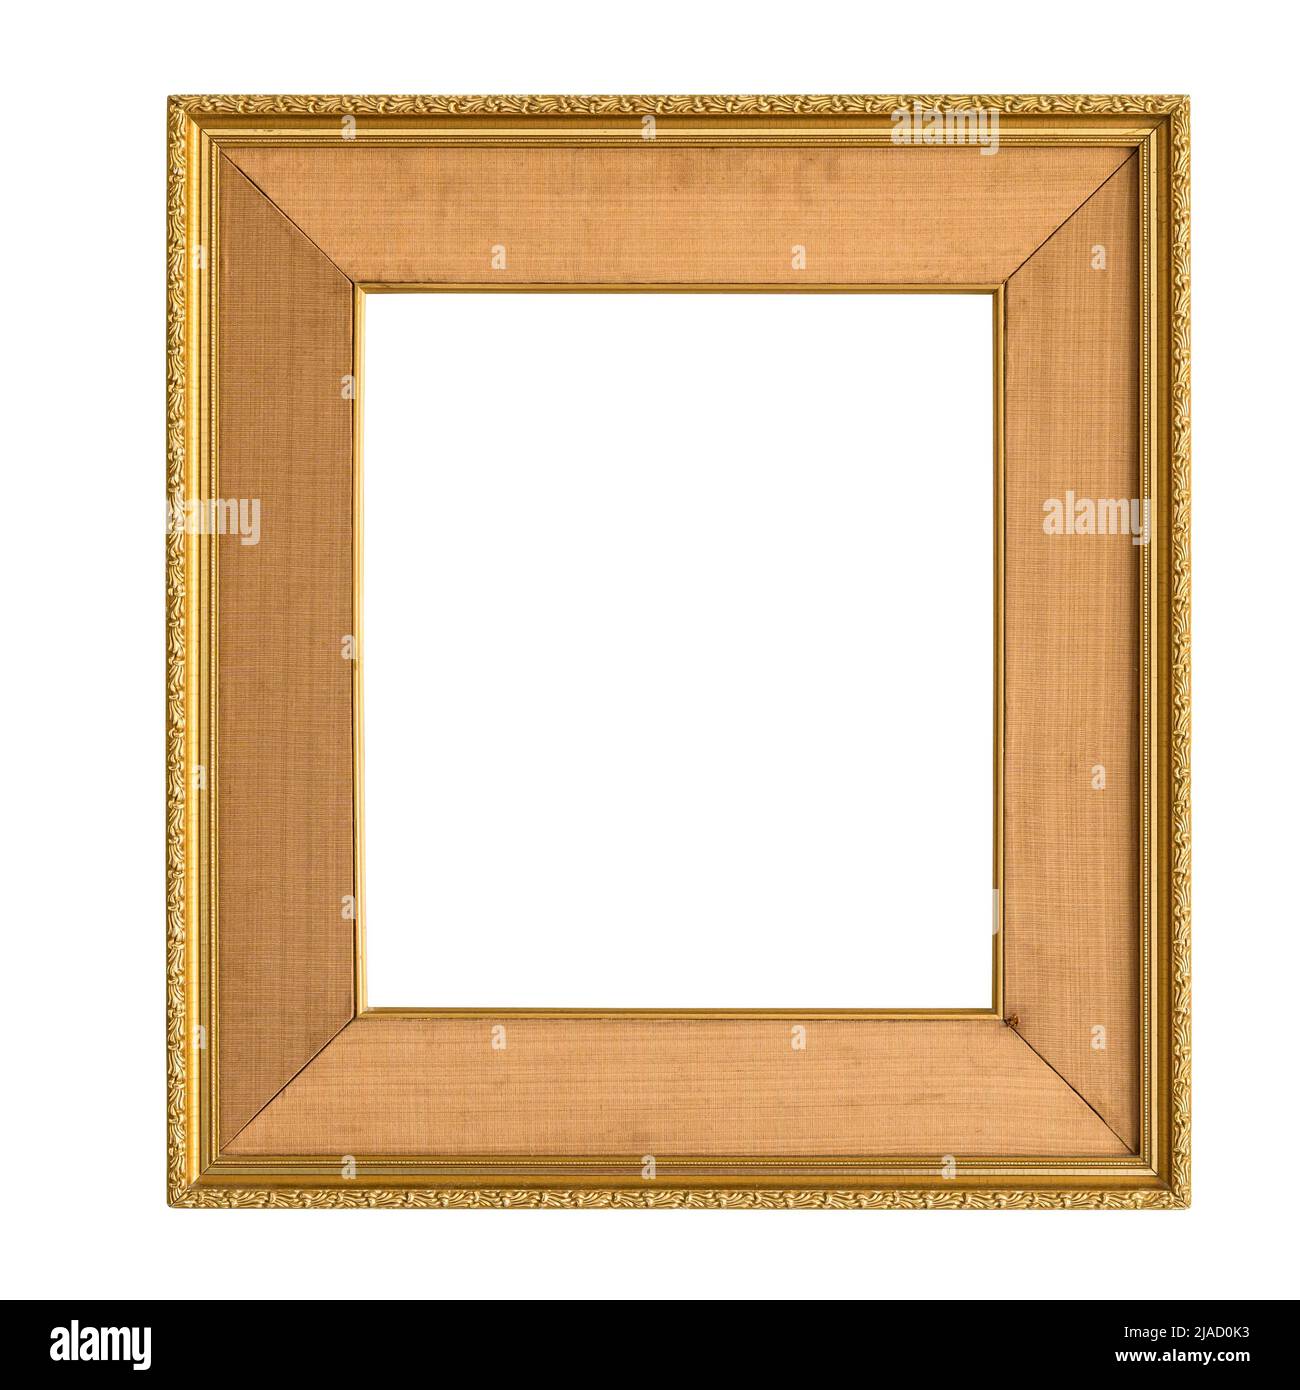 Plaza dorada decorativa picture frame aislado sobre fondo blanco con trazado de recorte Foto de stock